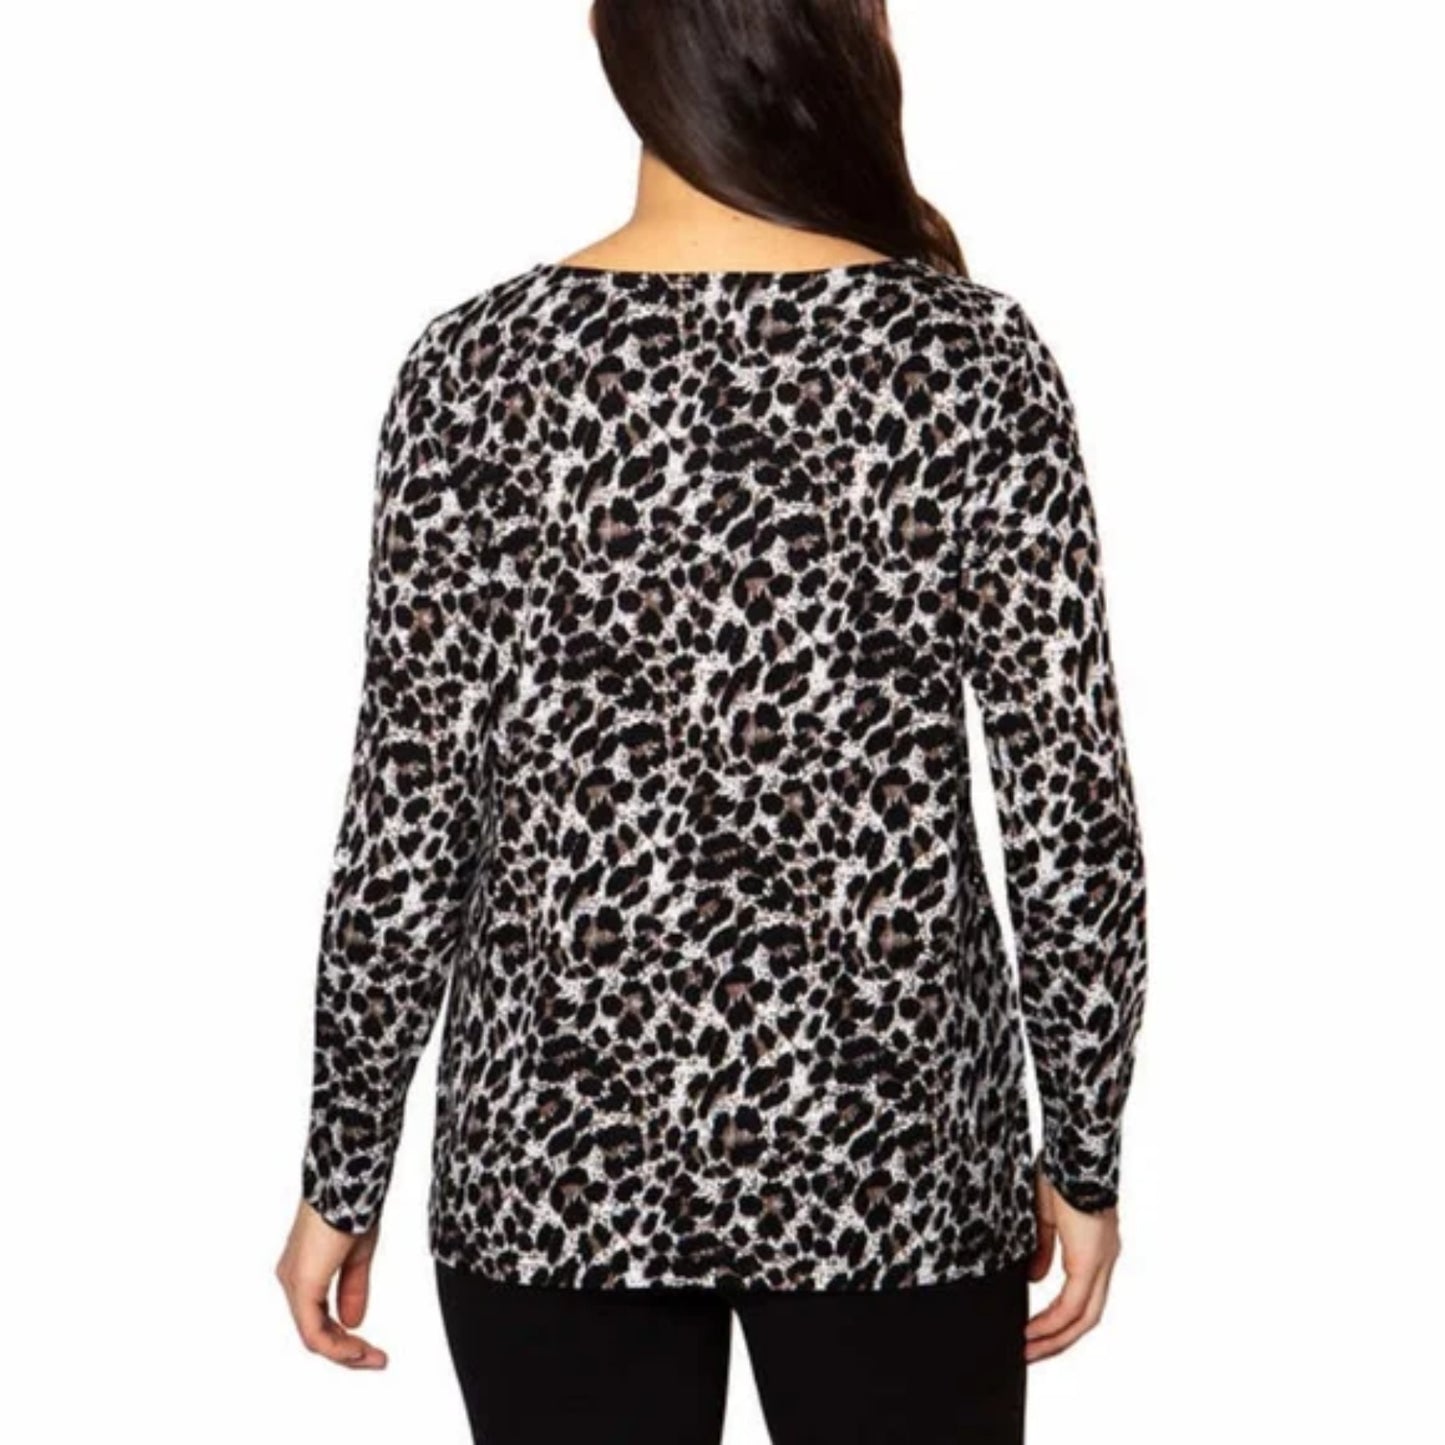 Mario Serrani Super Soft Lightweight Leopard Print Tunic Top